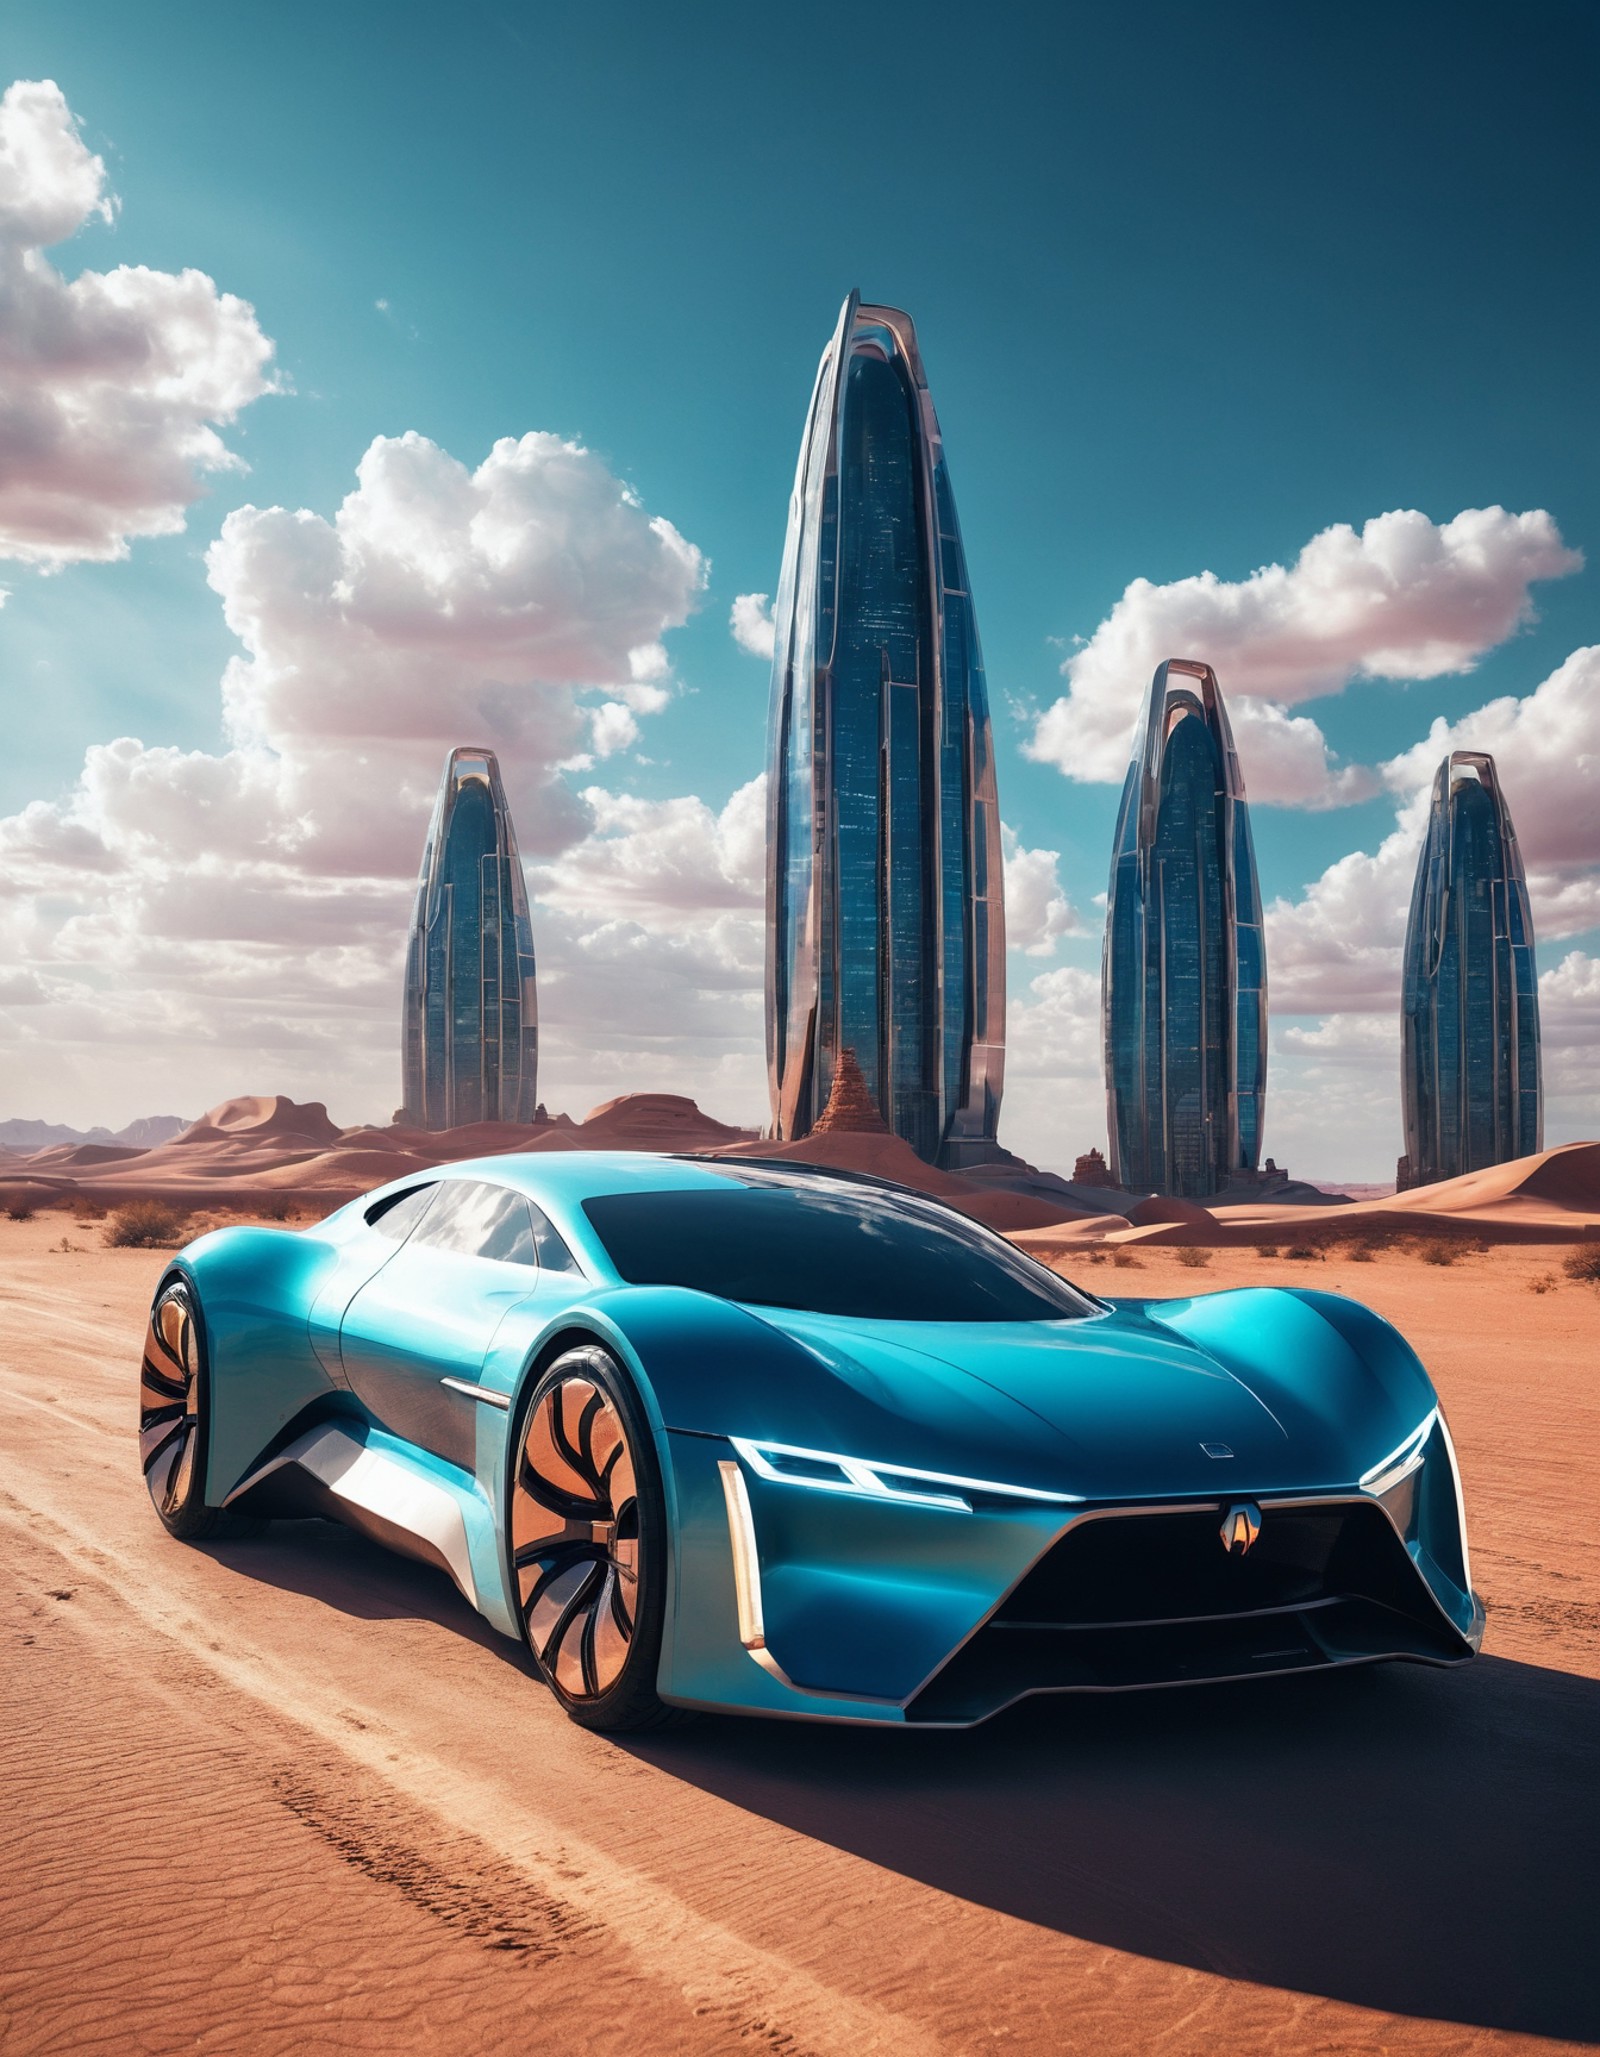 sci-fi, cinematic photo, futuristic design of electro car, majestic, desert city, skyscrapers, perfect lighting, clouds, v...